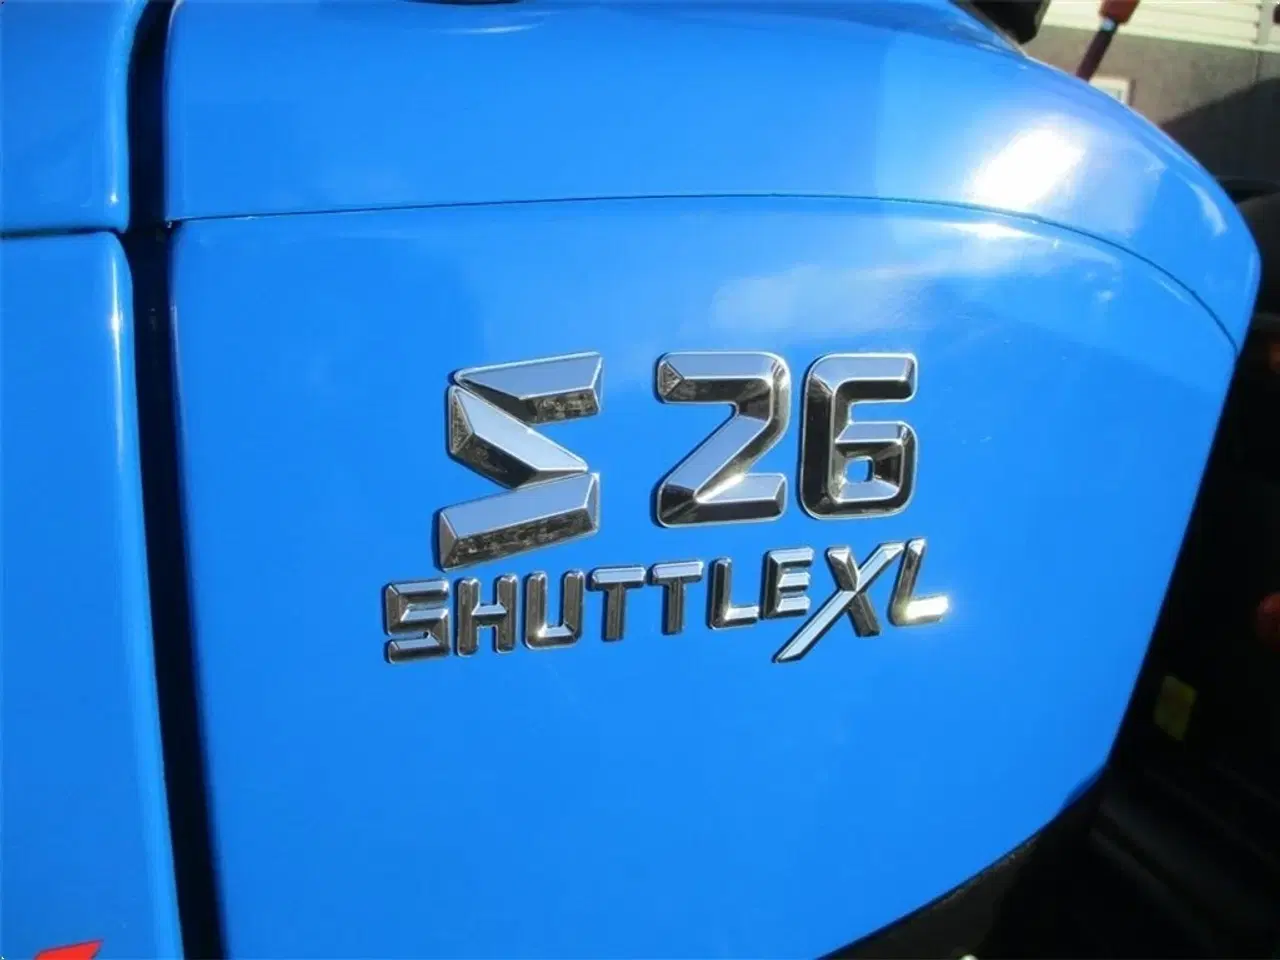 Billede 2 - Solis S26 Shuttle XL 9x9 med store brede Turf hjul på til prisen!